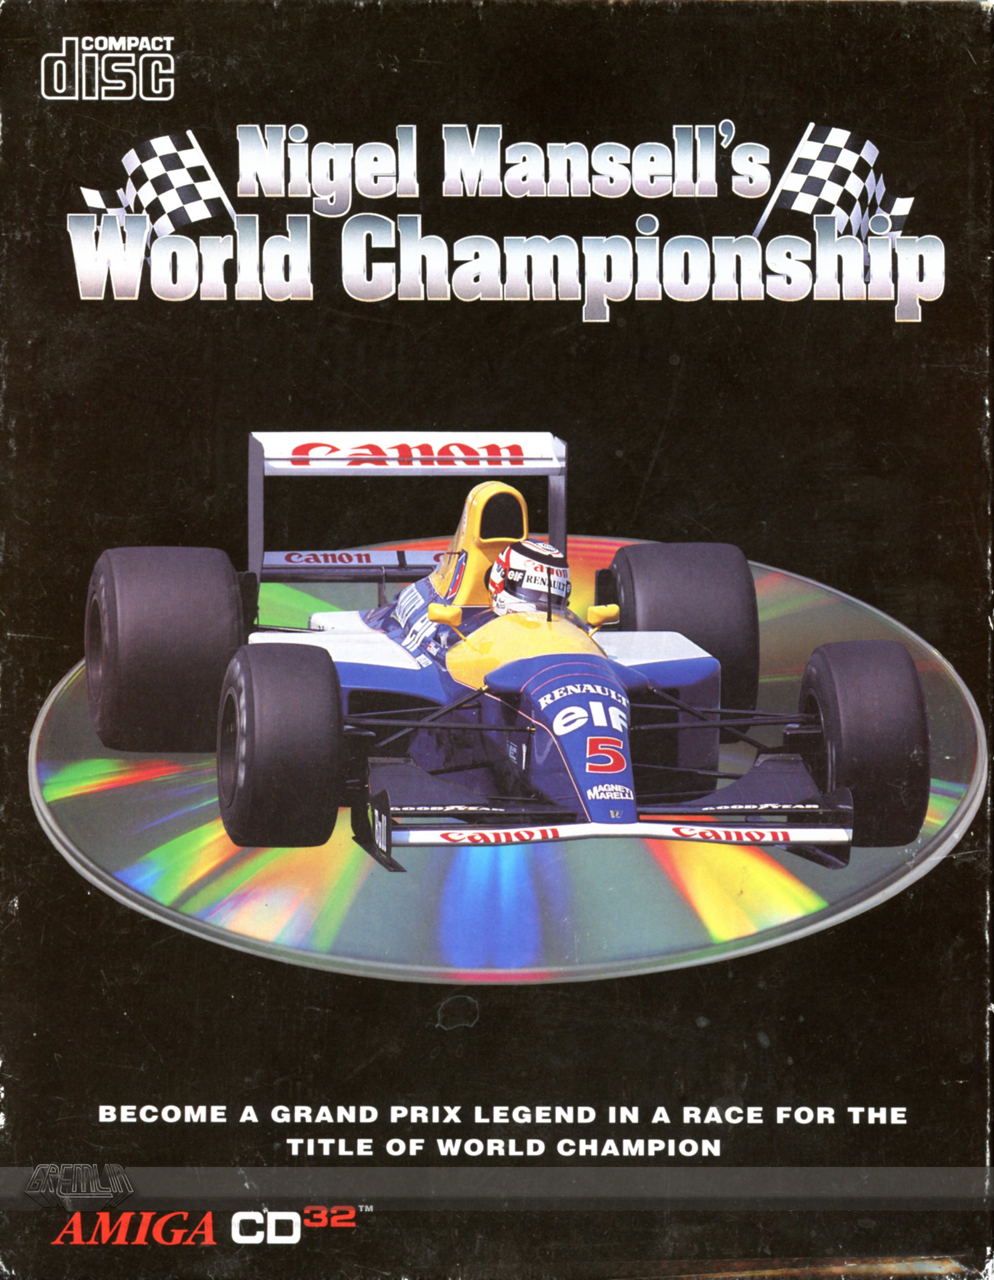 Nigel Mansell’s World Championship (Credits, Manual & Media)